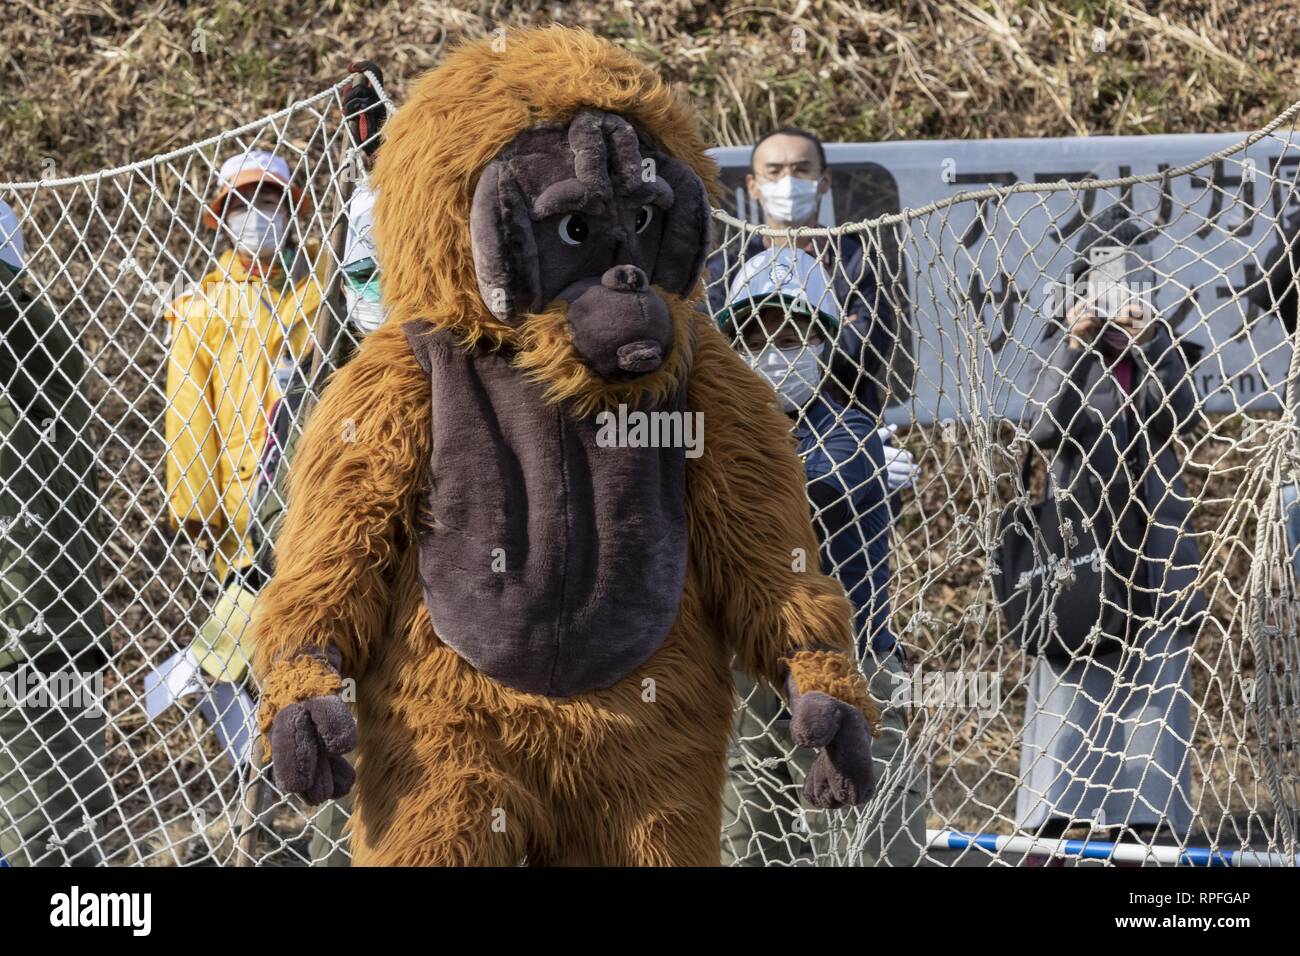 Tokyo, Japan. 22nd Feb, 2019. A zookeeper wearing orangutan